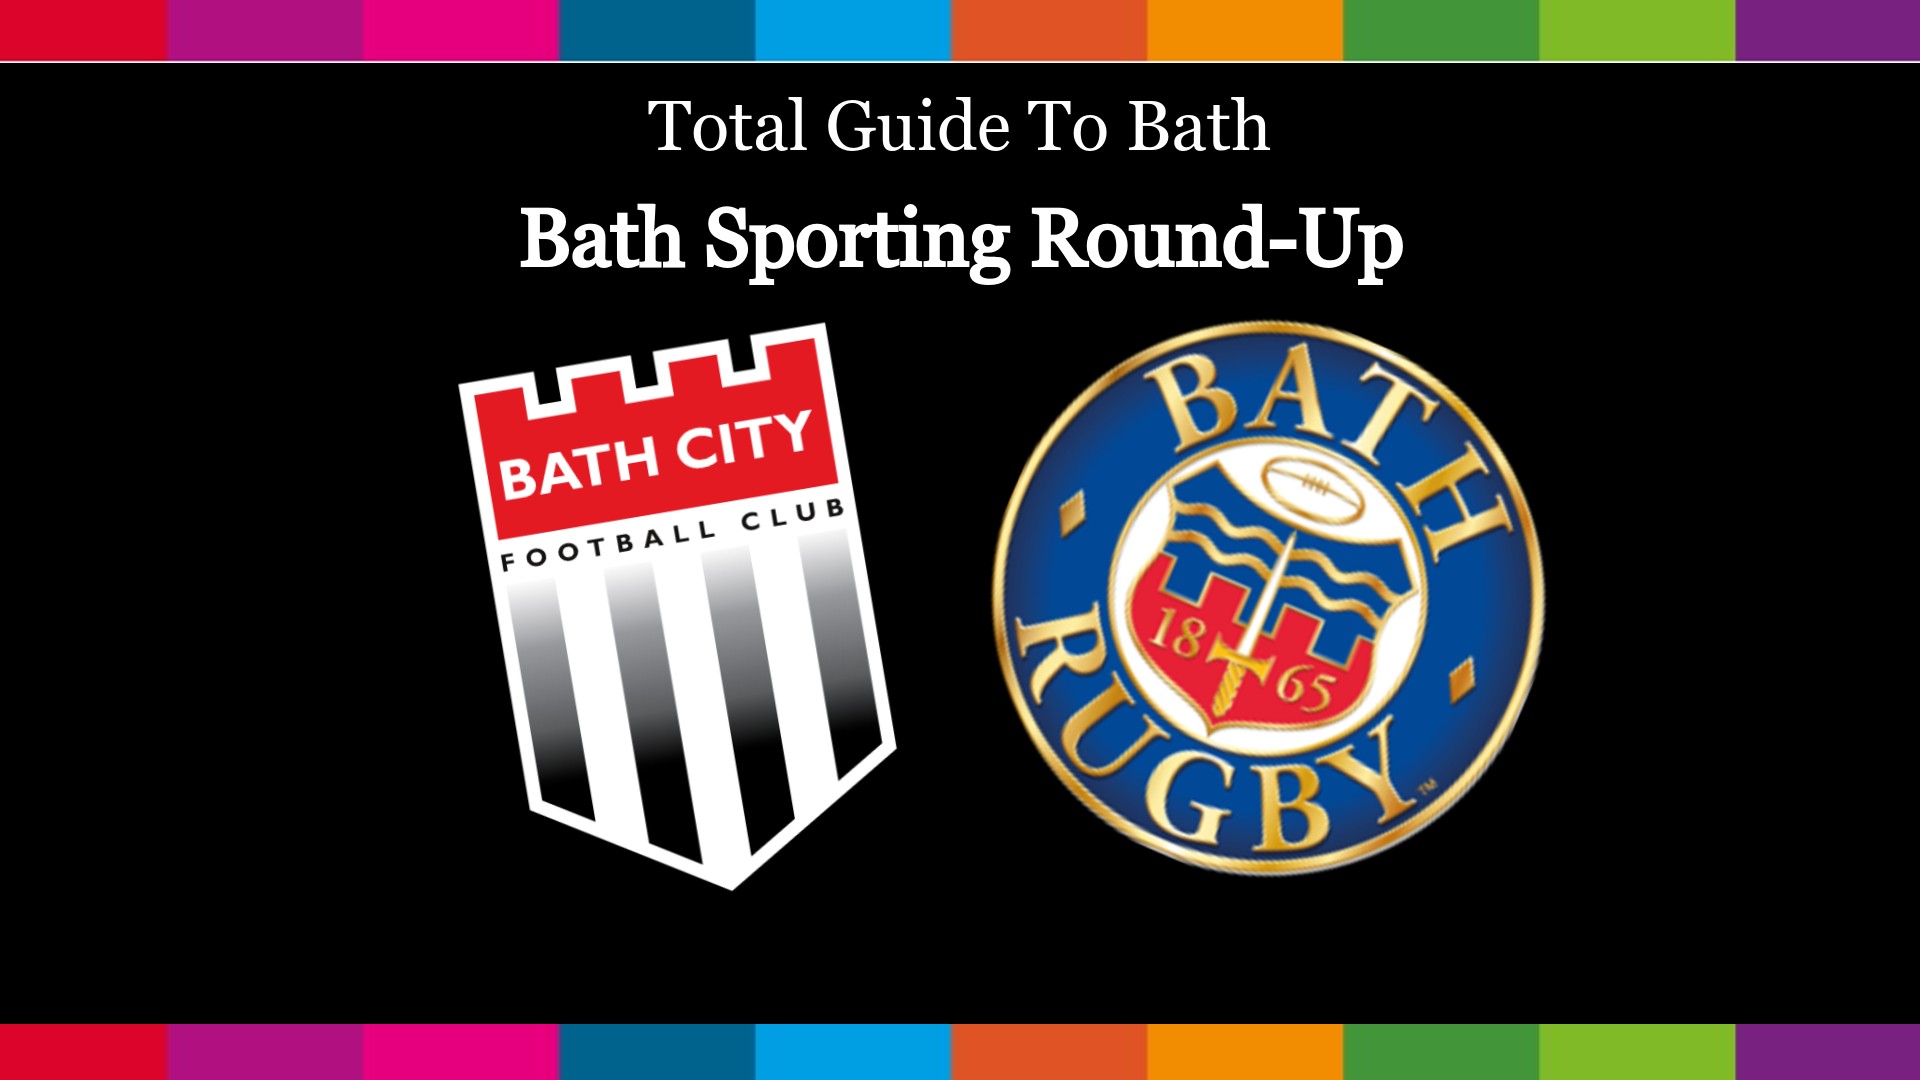 Bath Sporting Round-Up